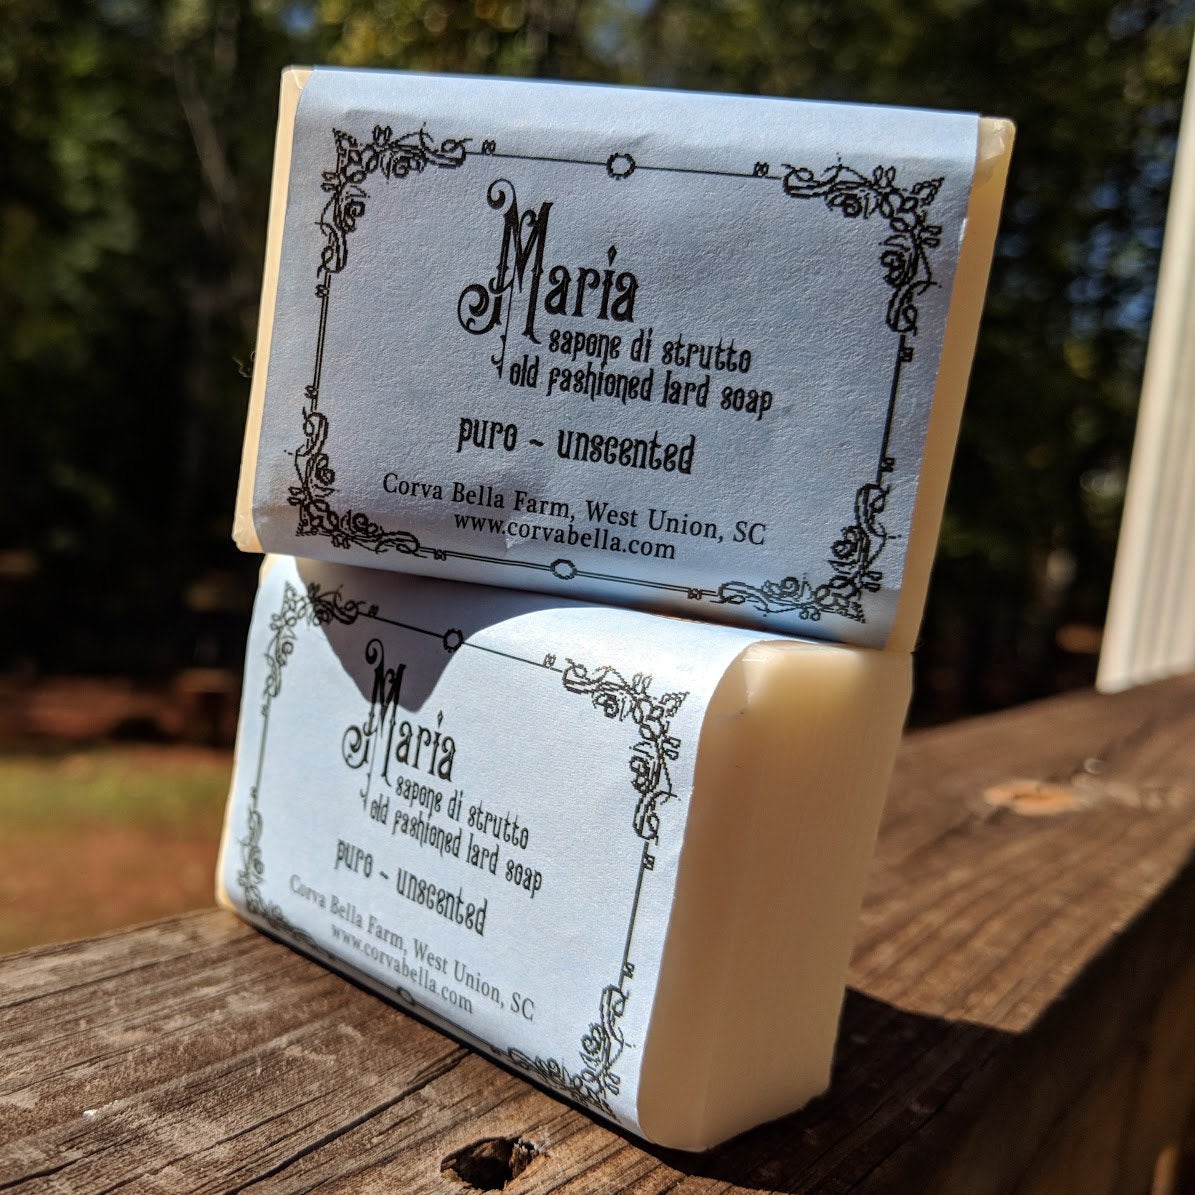 MARIA lard soap - Pure & unscented